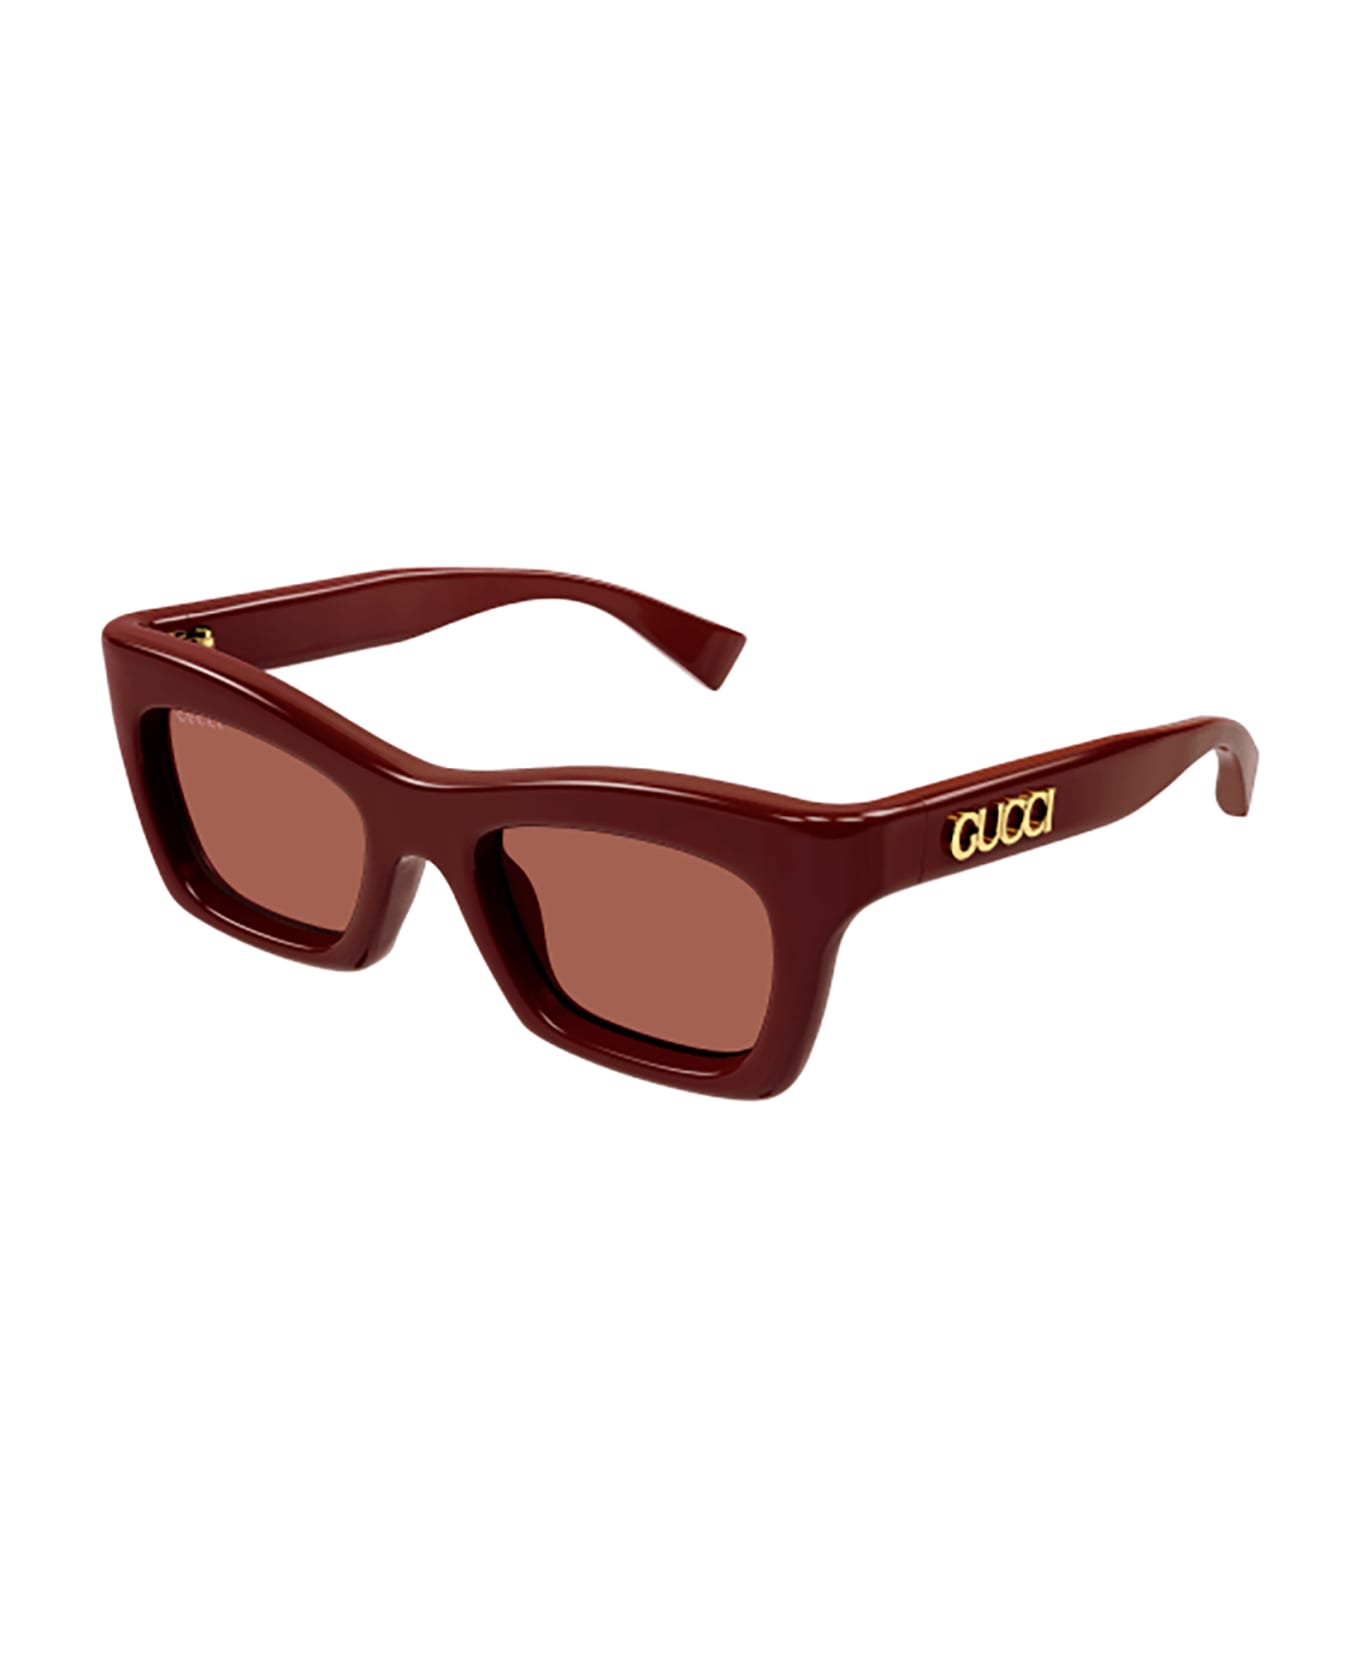 Gucci Eyewear GG1773S Sunglasses - Burgundy Burgundy Bro サングラス